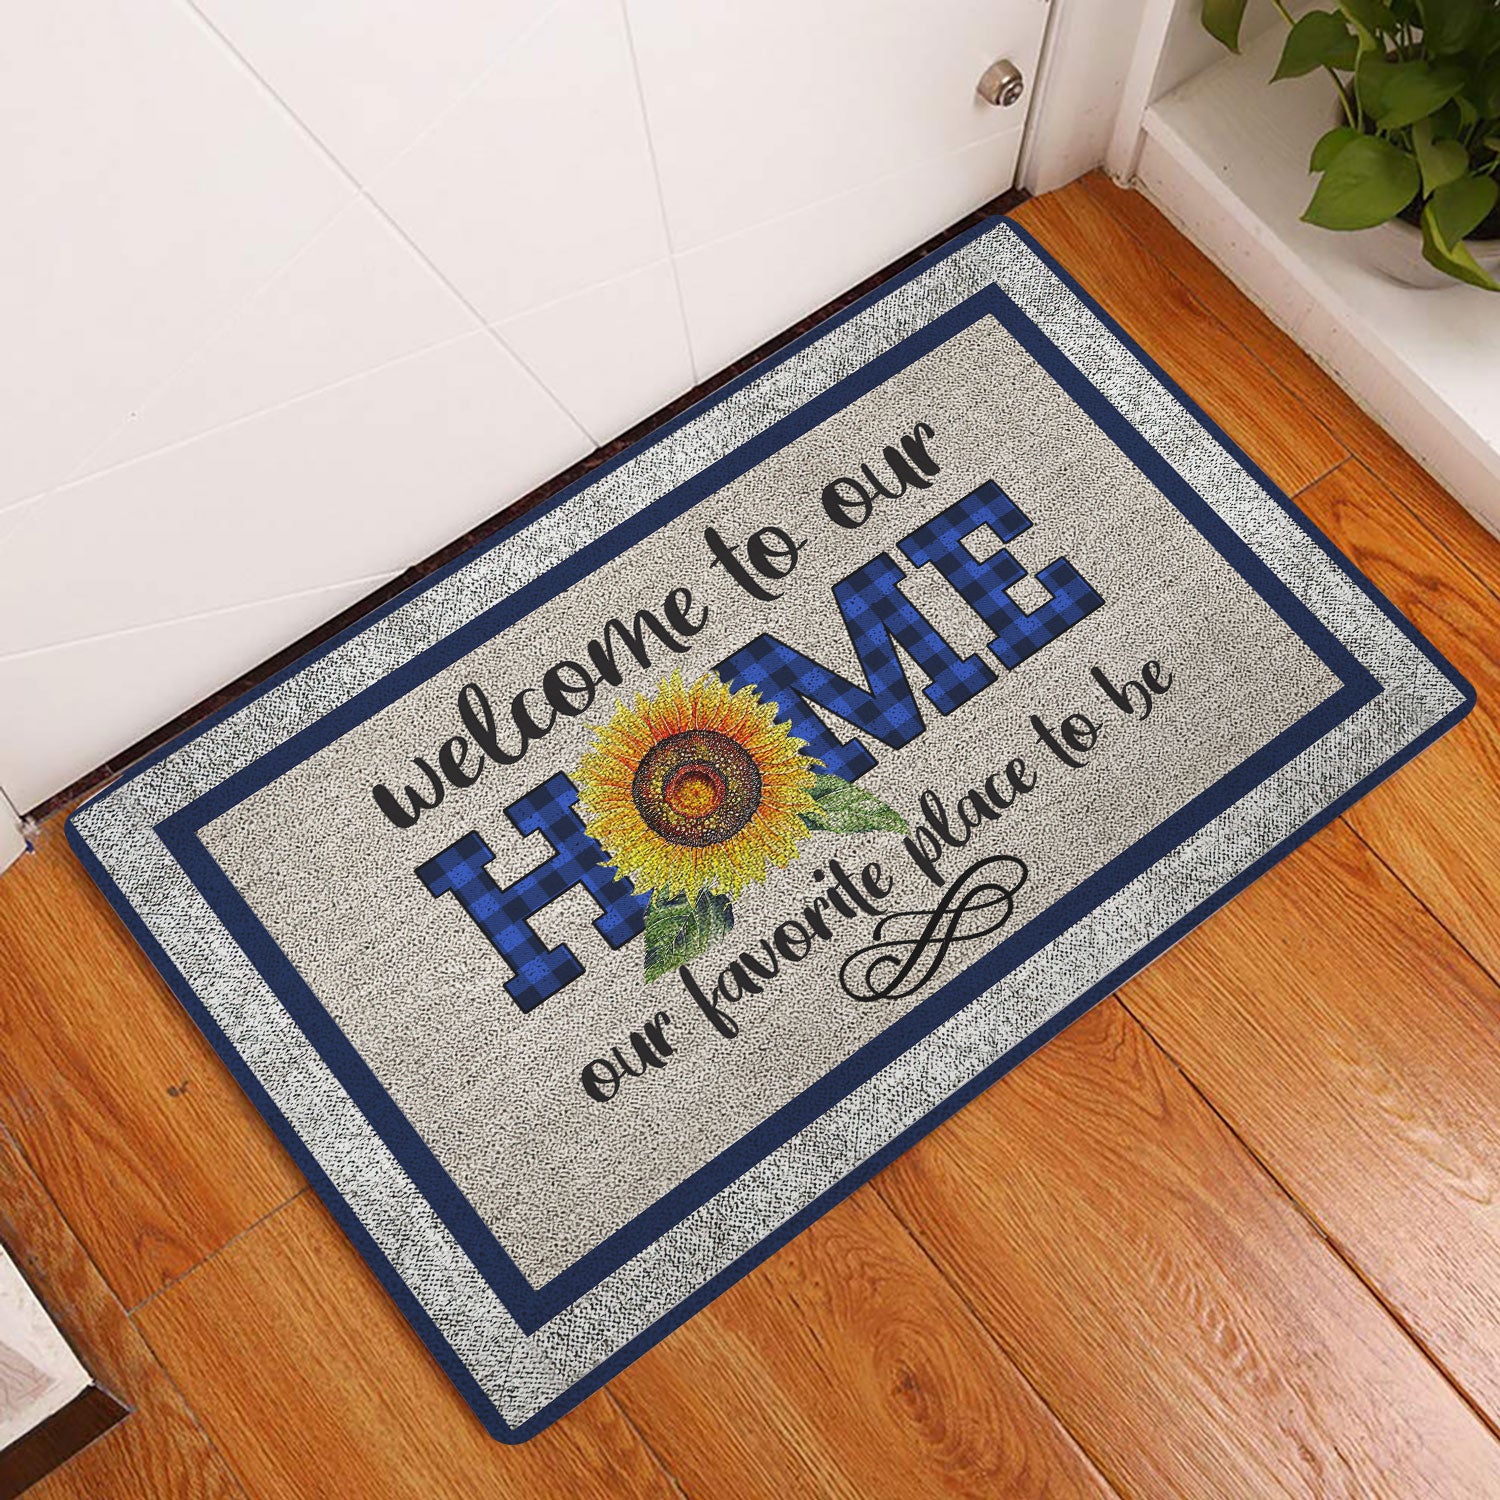 Ohaprints-Doormat-Outdoor-Indoor-Welcome-To-Our-Home-Sunflower-Blue-Plaid-Pattern-Rubber-Door-Mat-1963-